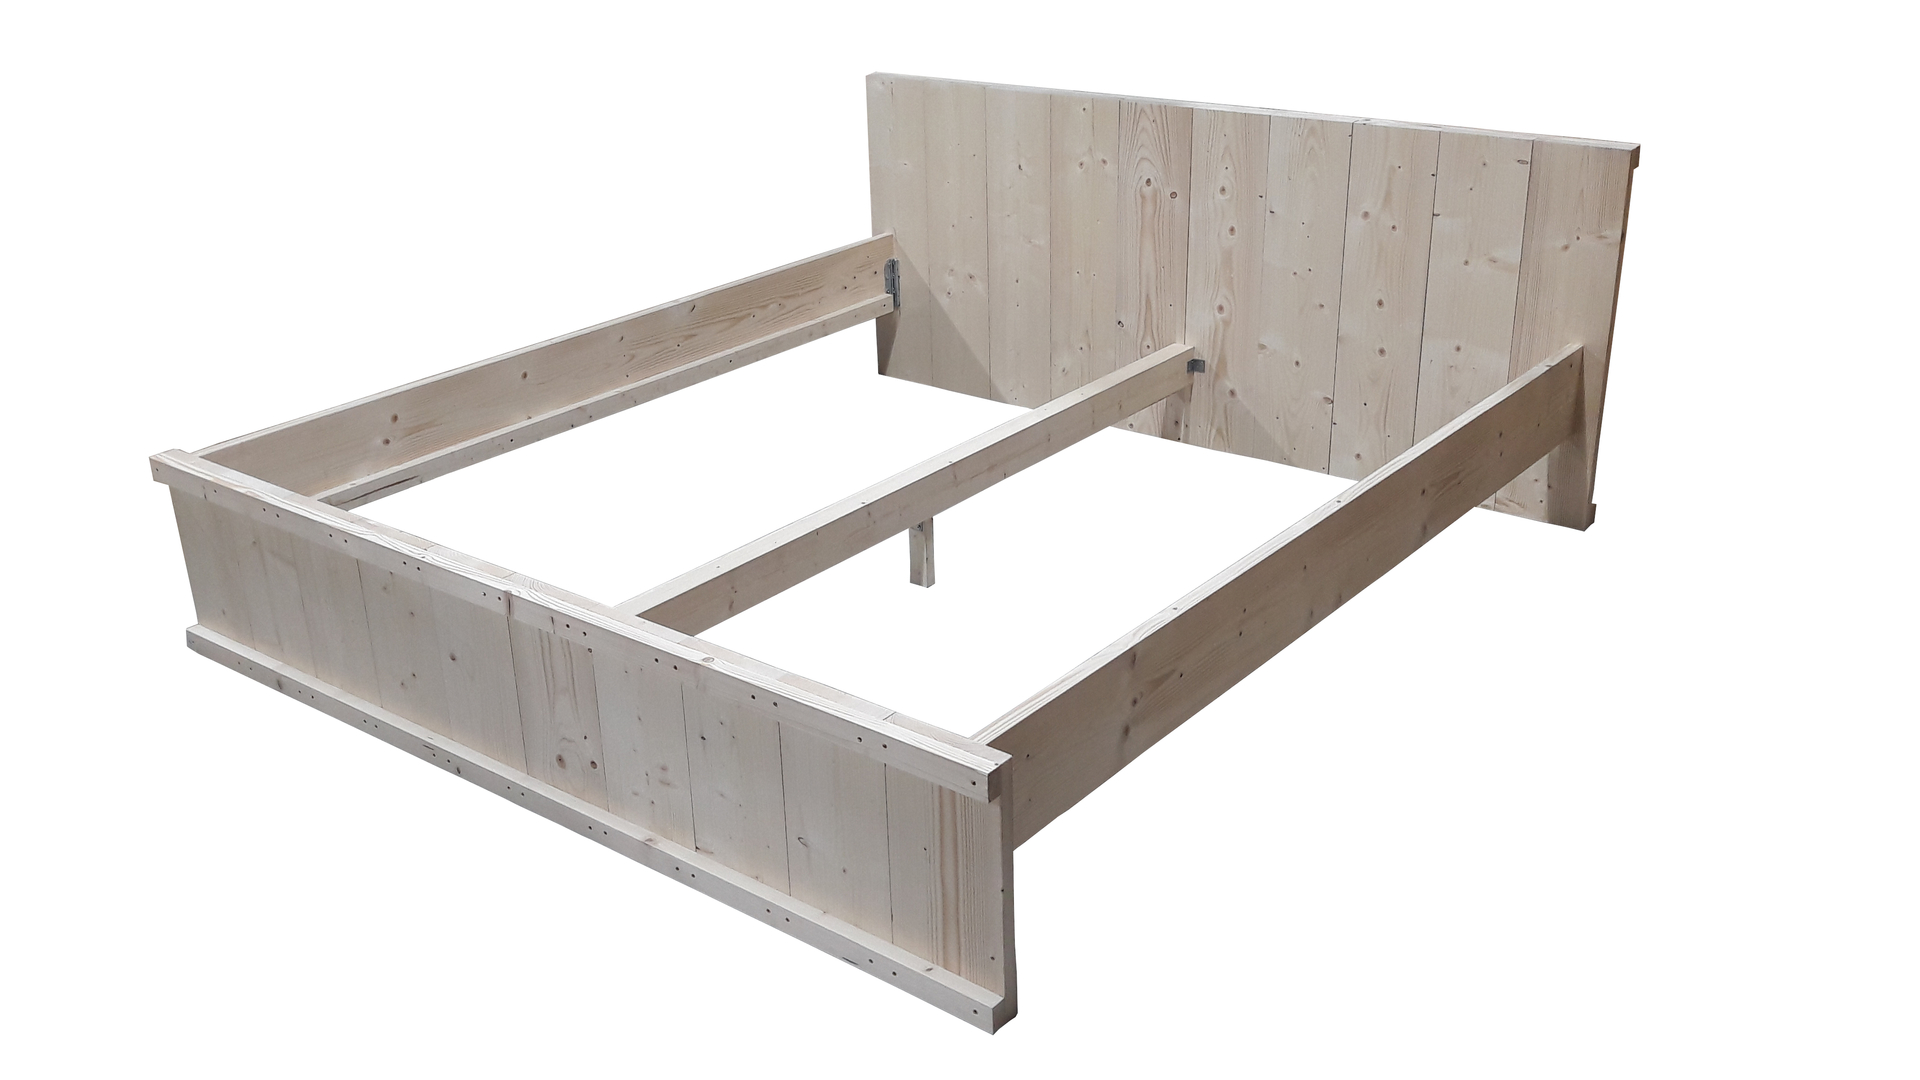 gek Kietelen module Tweepersoons bed bouwpakket om zelf te maken - Woodkit